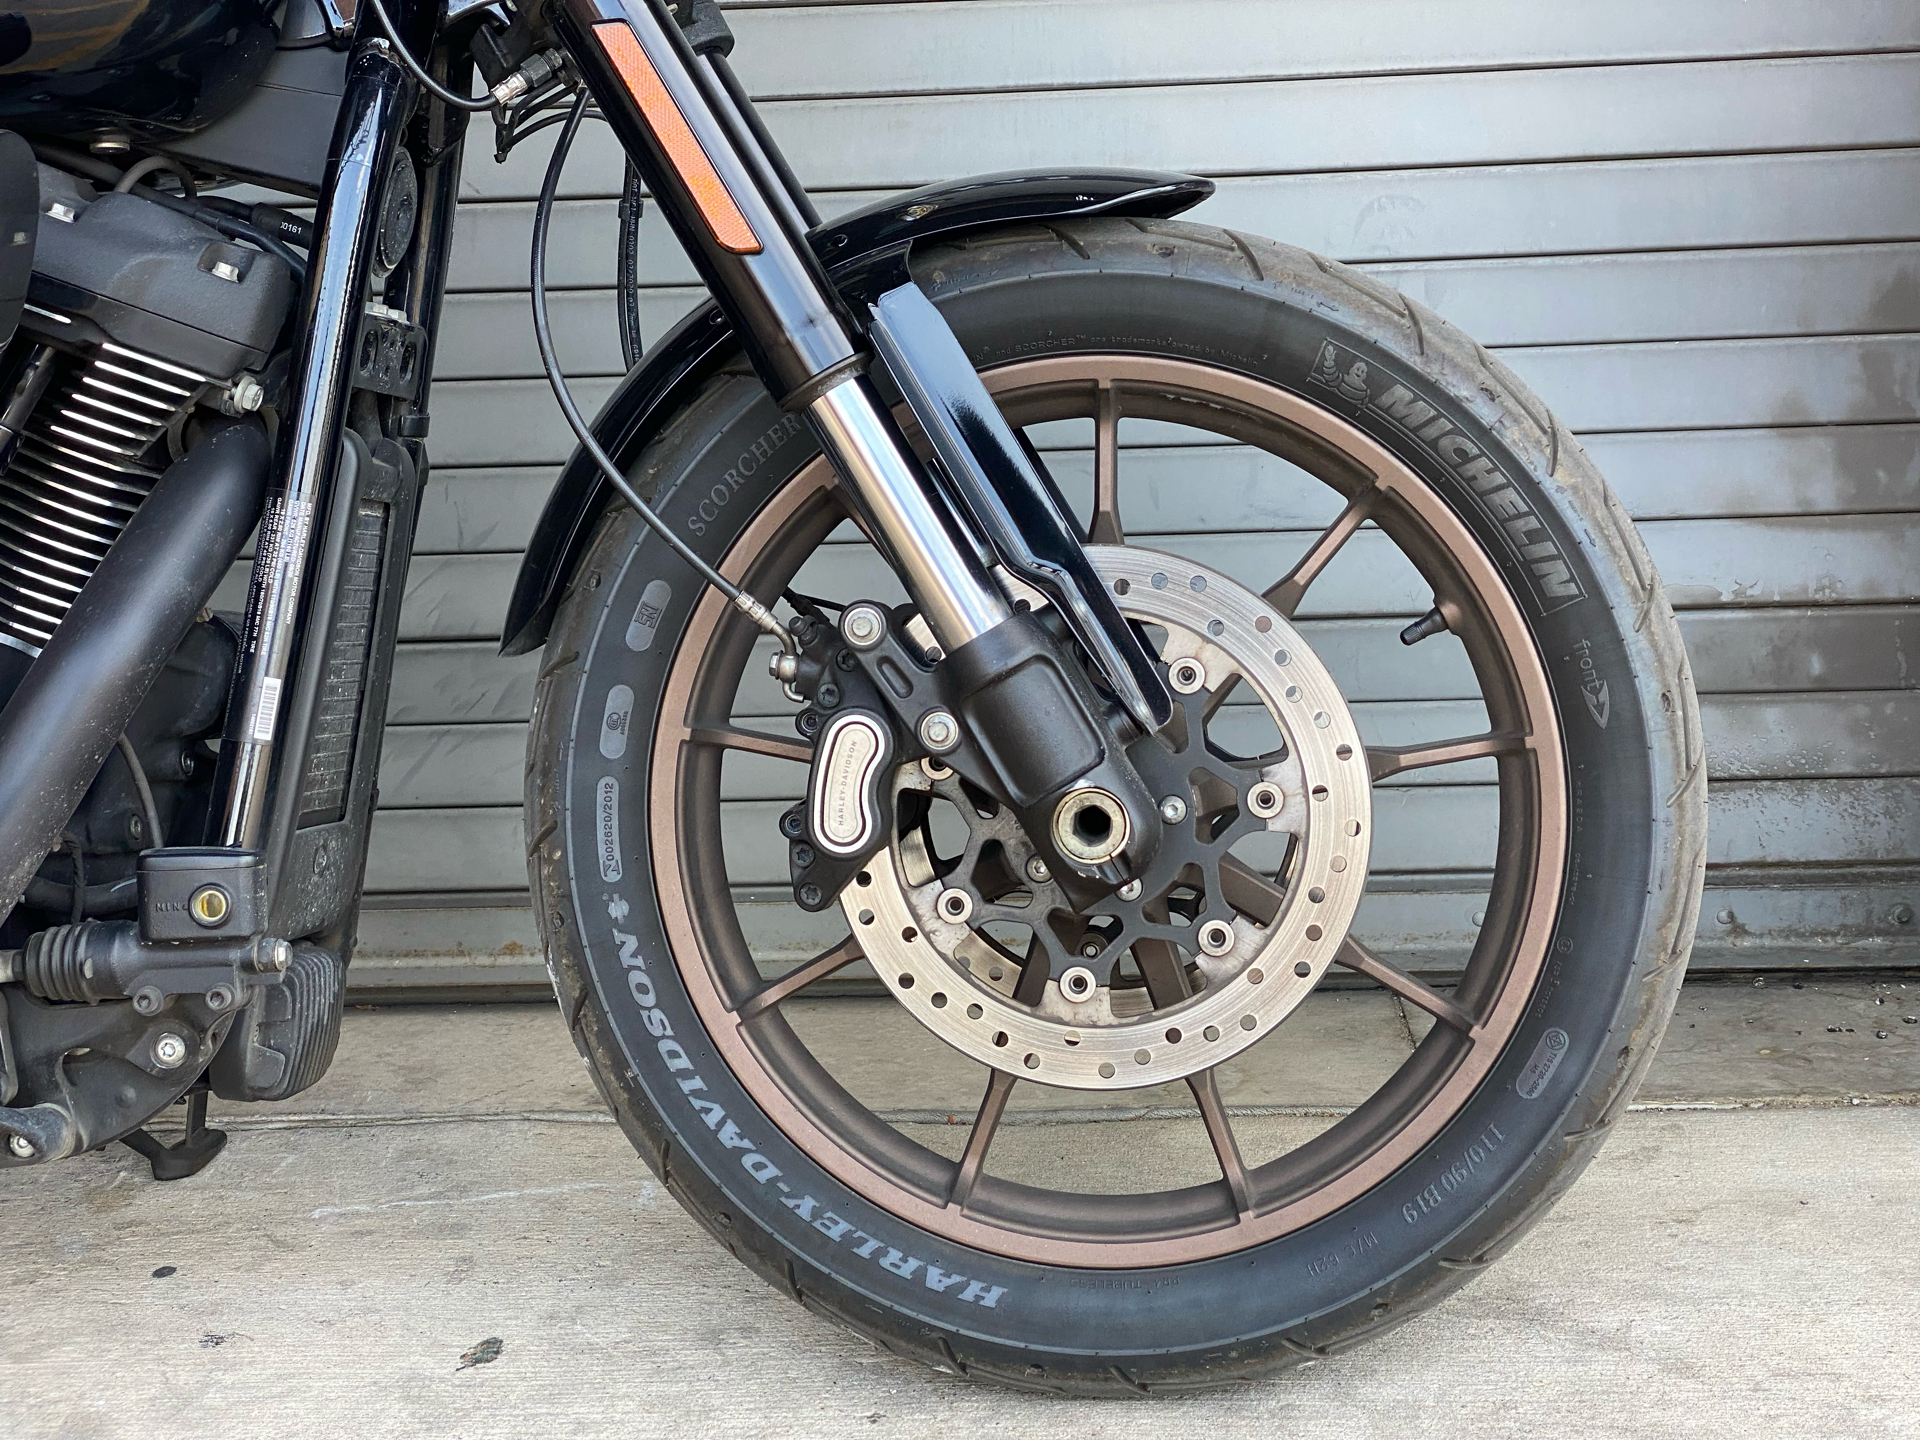 2020 Harley-Davidson Low Rider®S in Carrollton, Texas - Photo 4